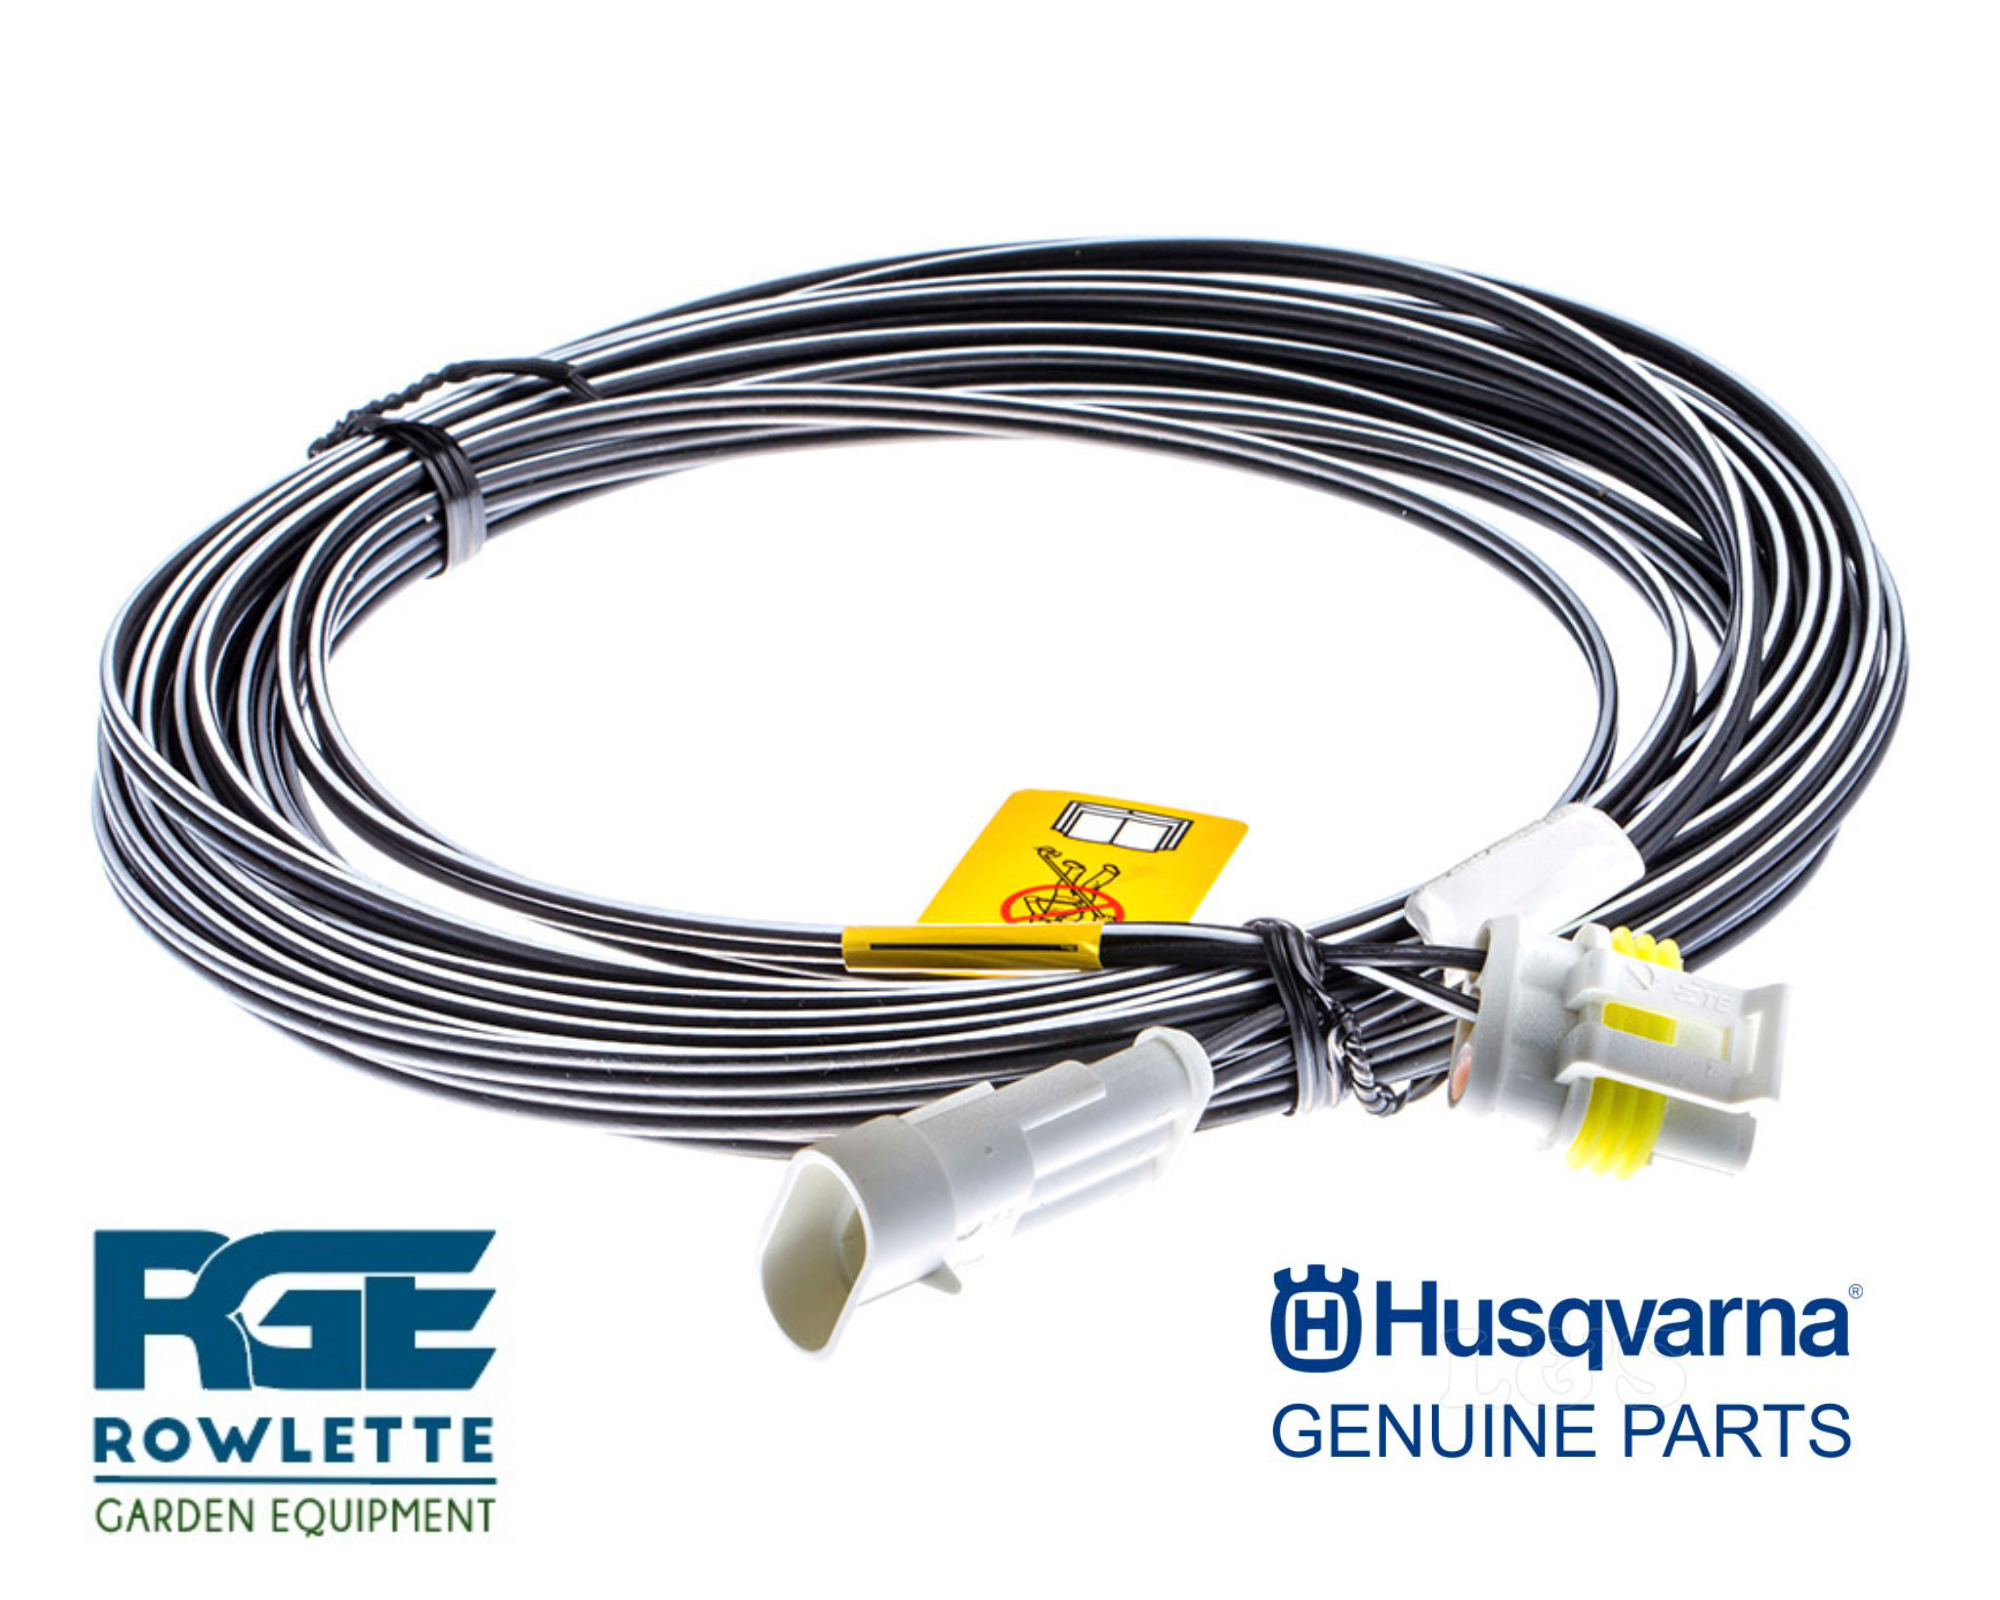 Genuine Husqvarna Automower Low Voltage Cable 20 m